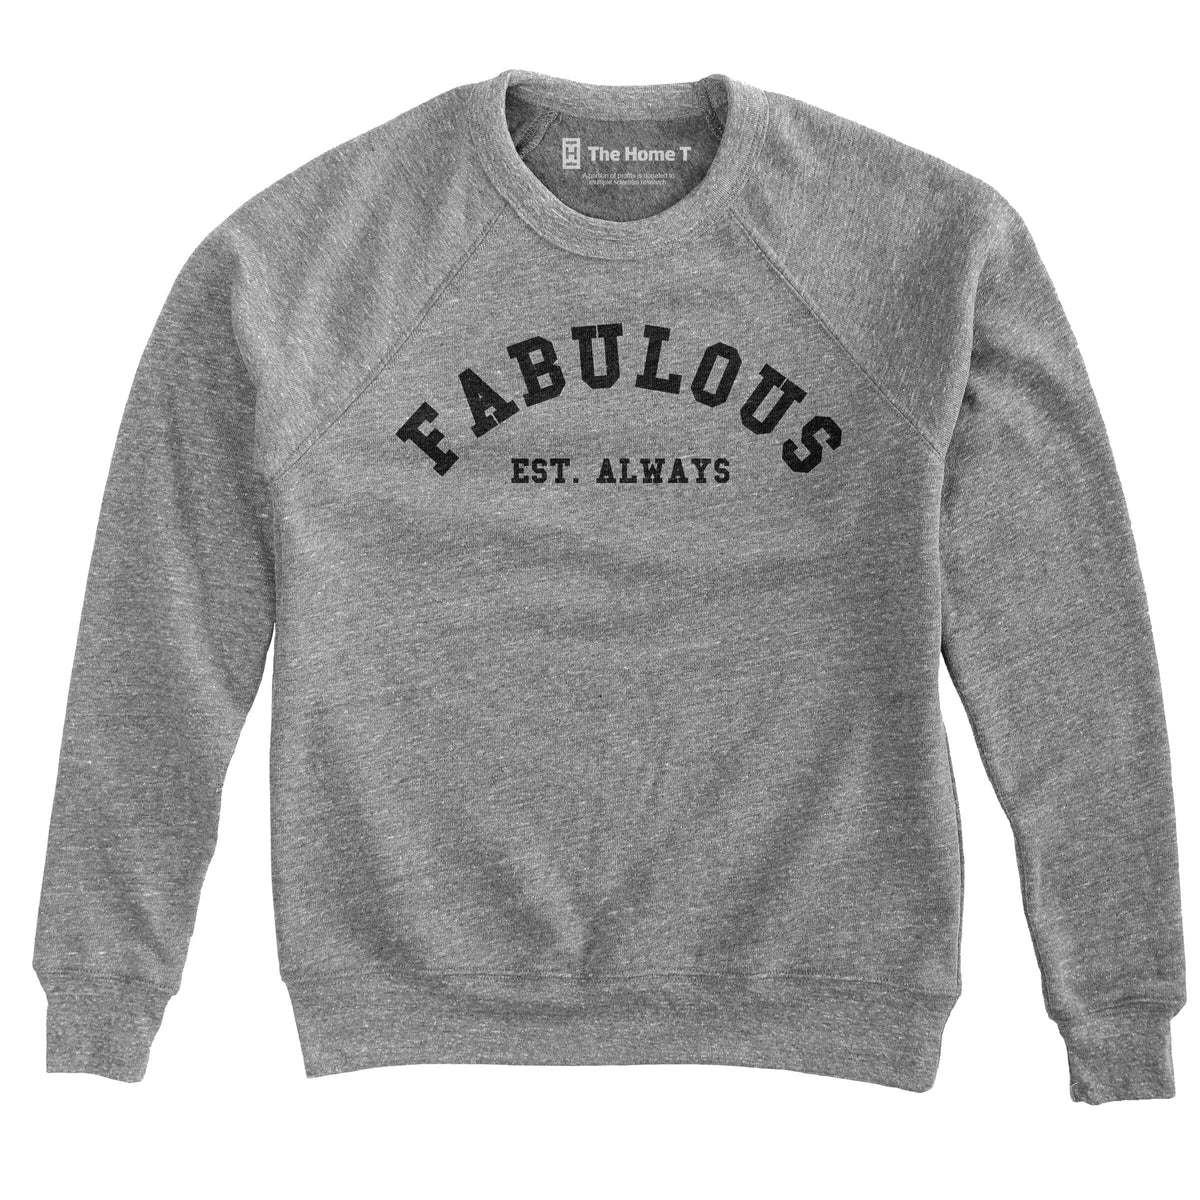 Fabulous Est. Always Sweatshirt